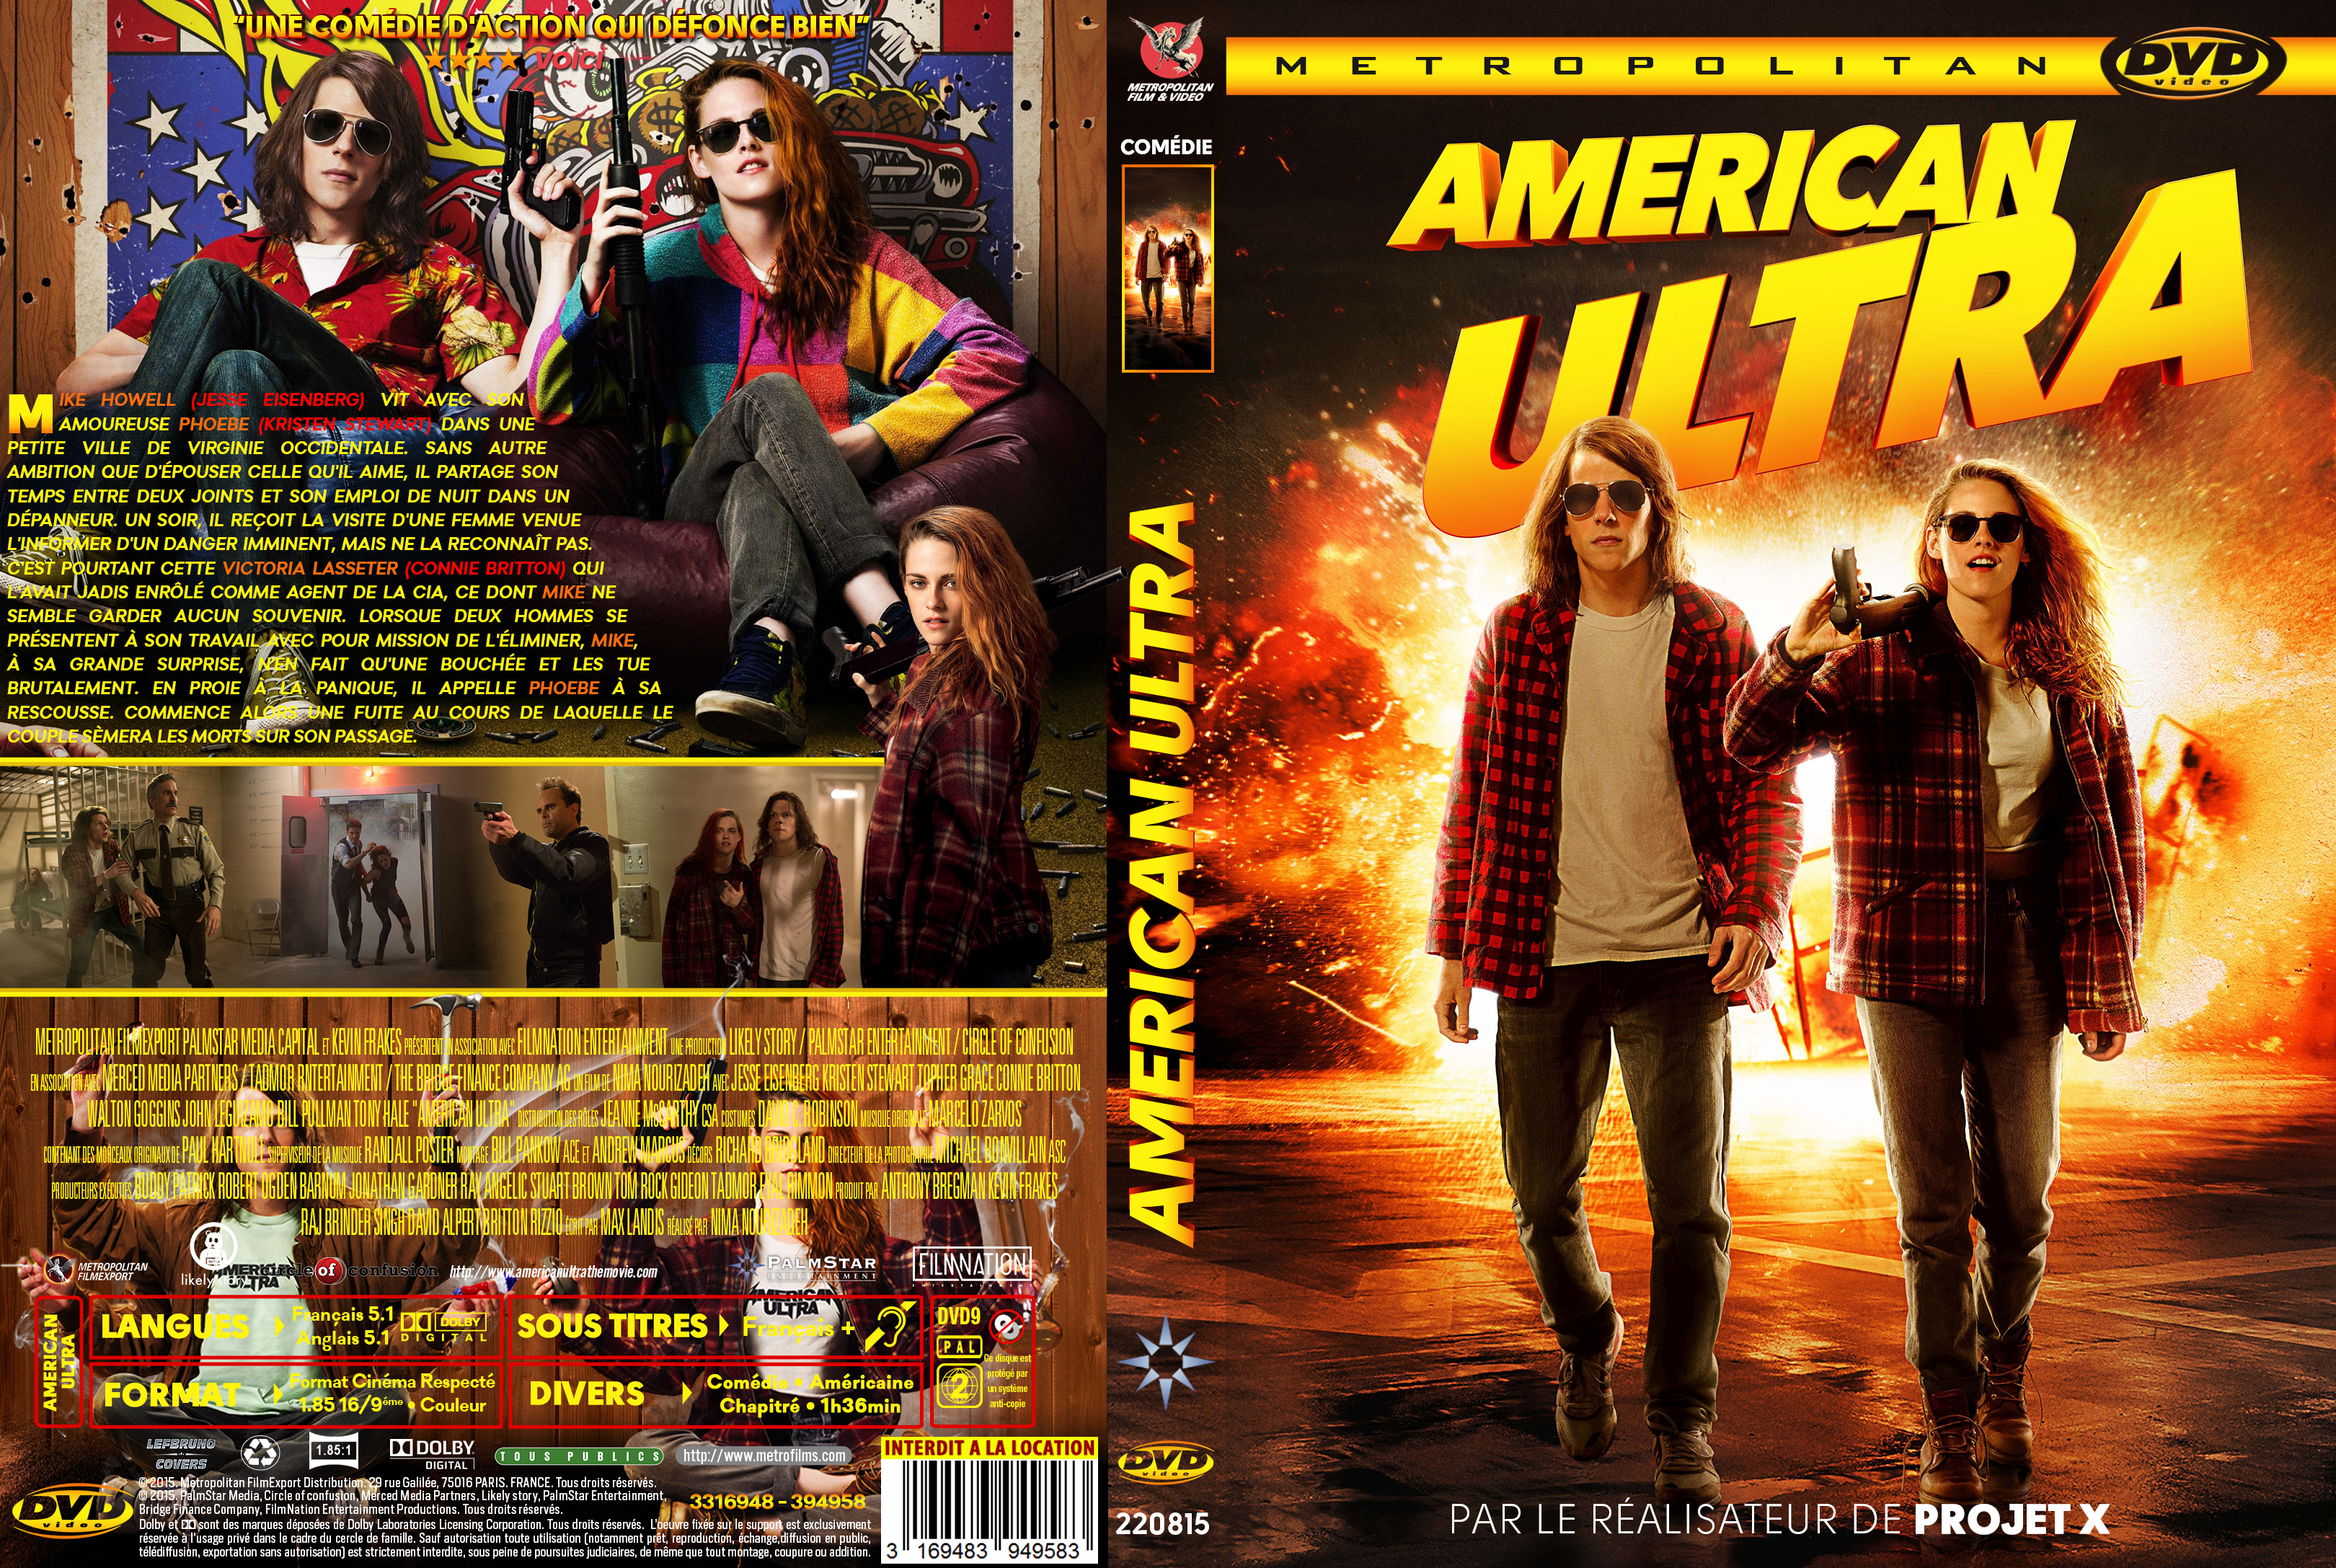 Jaquette DVD American Ultra custom